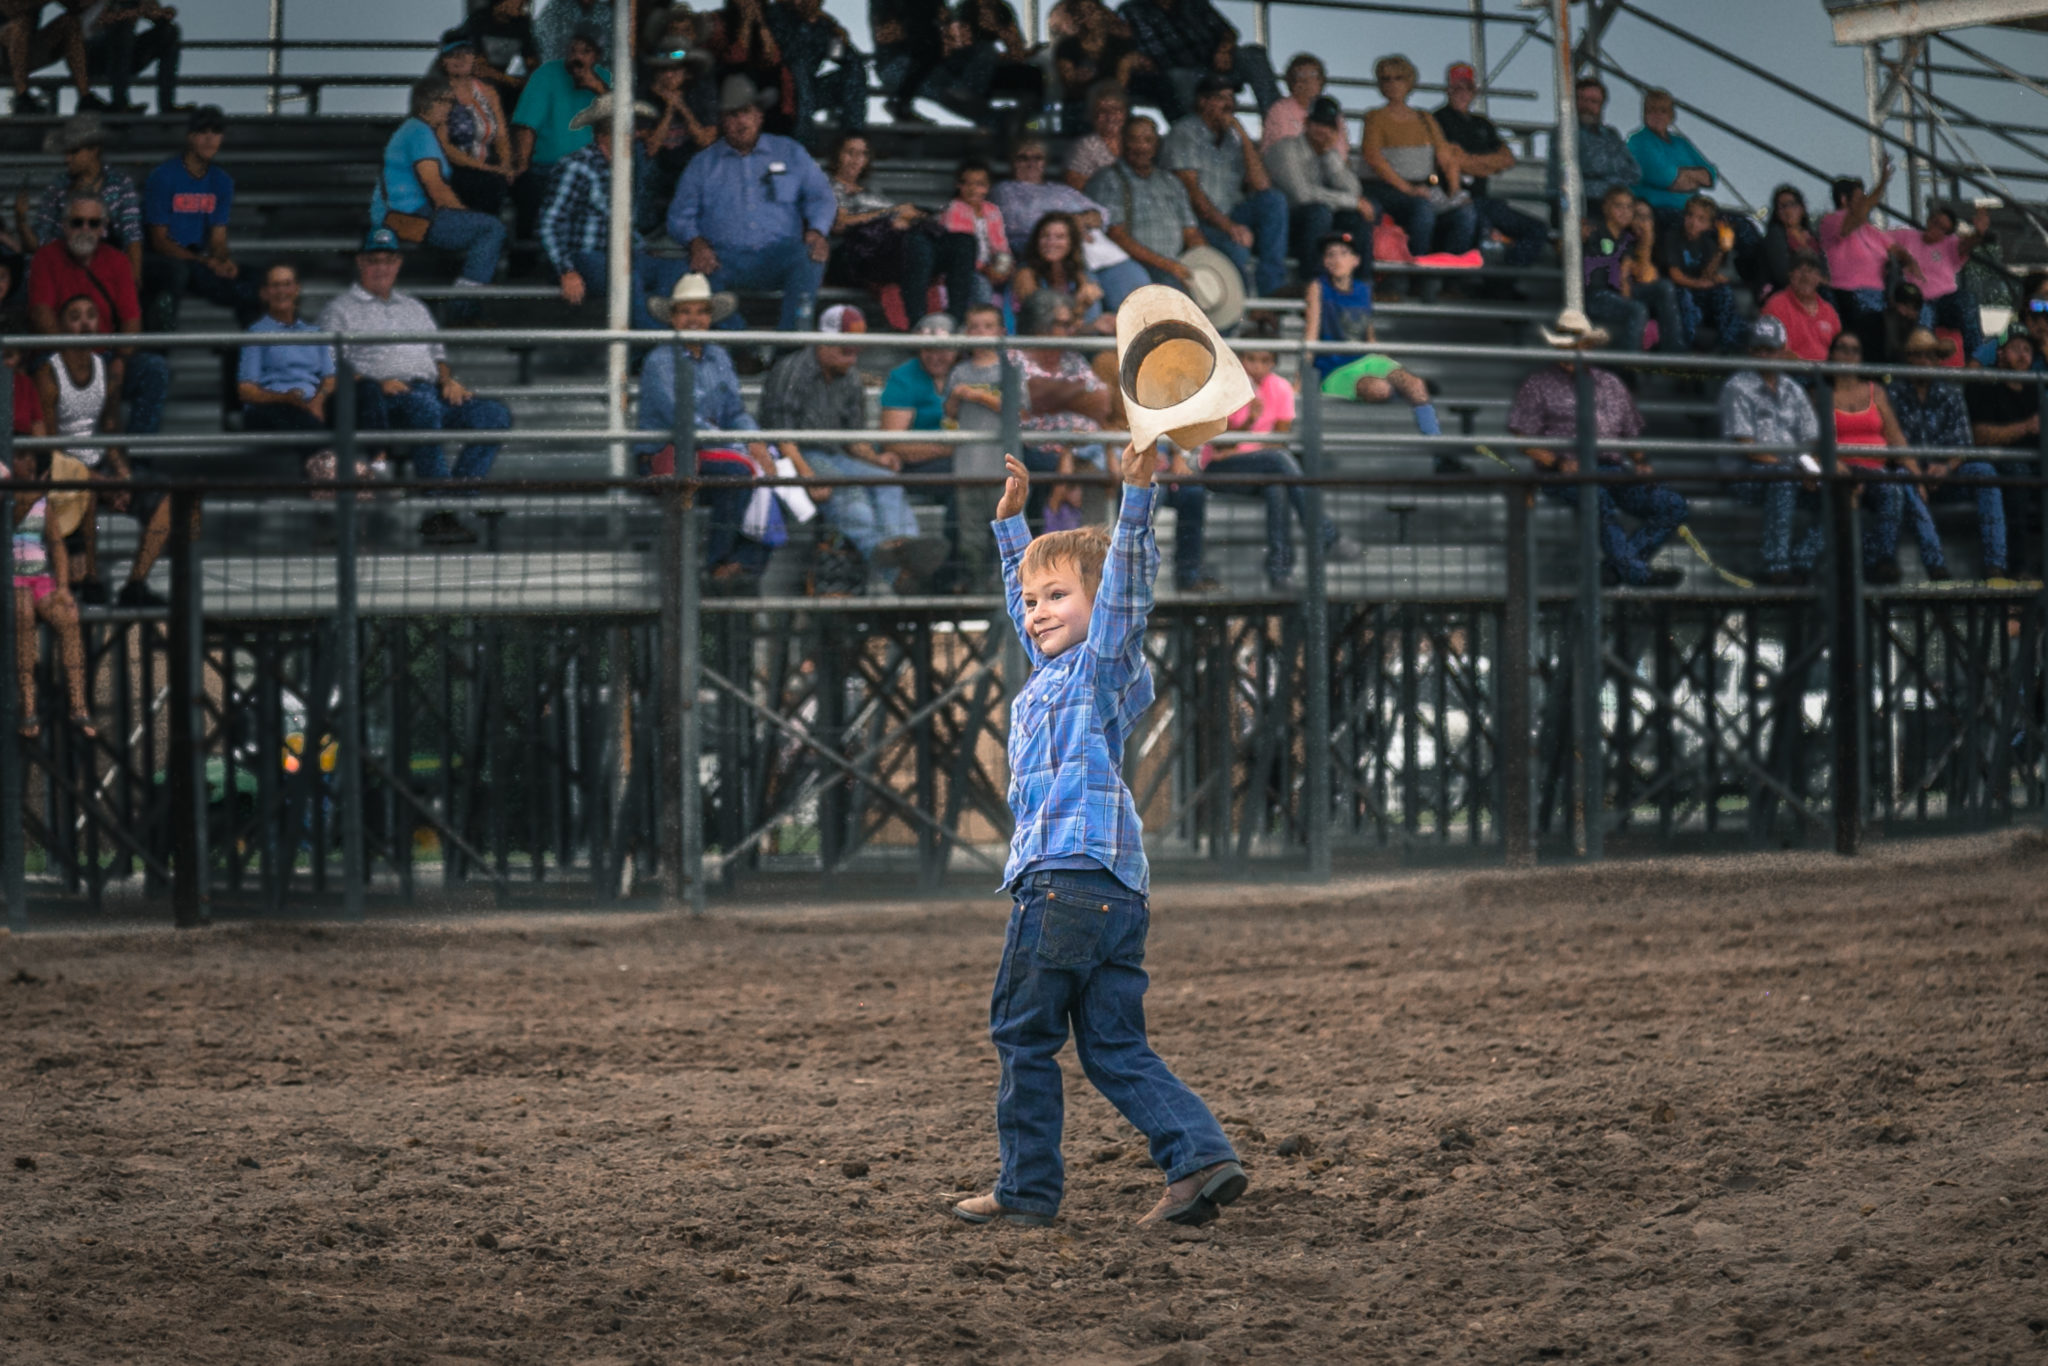 Keith County Fair & Ogallala RoundUp Rodeo Visit Keith County, Nebraska